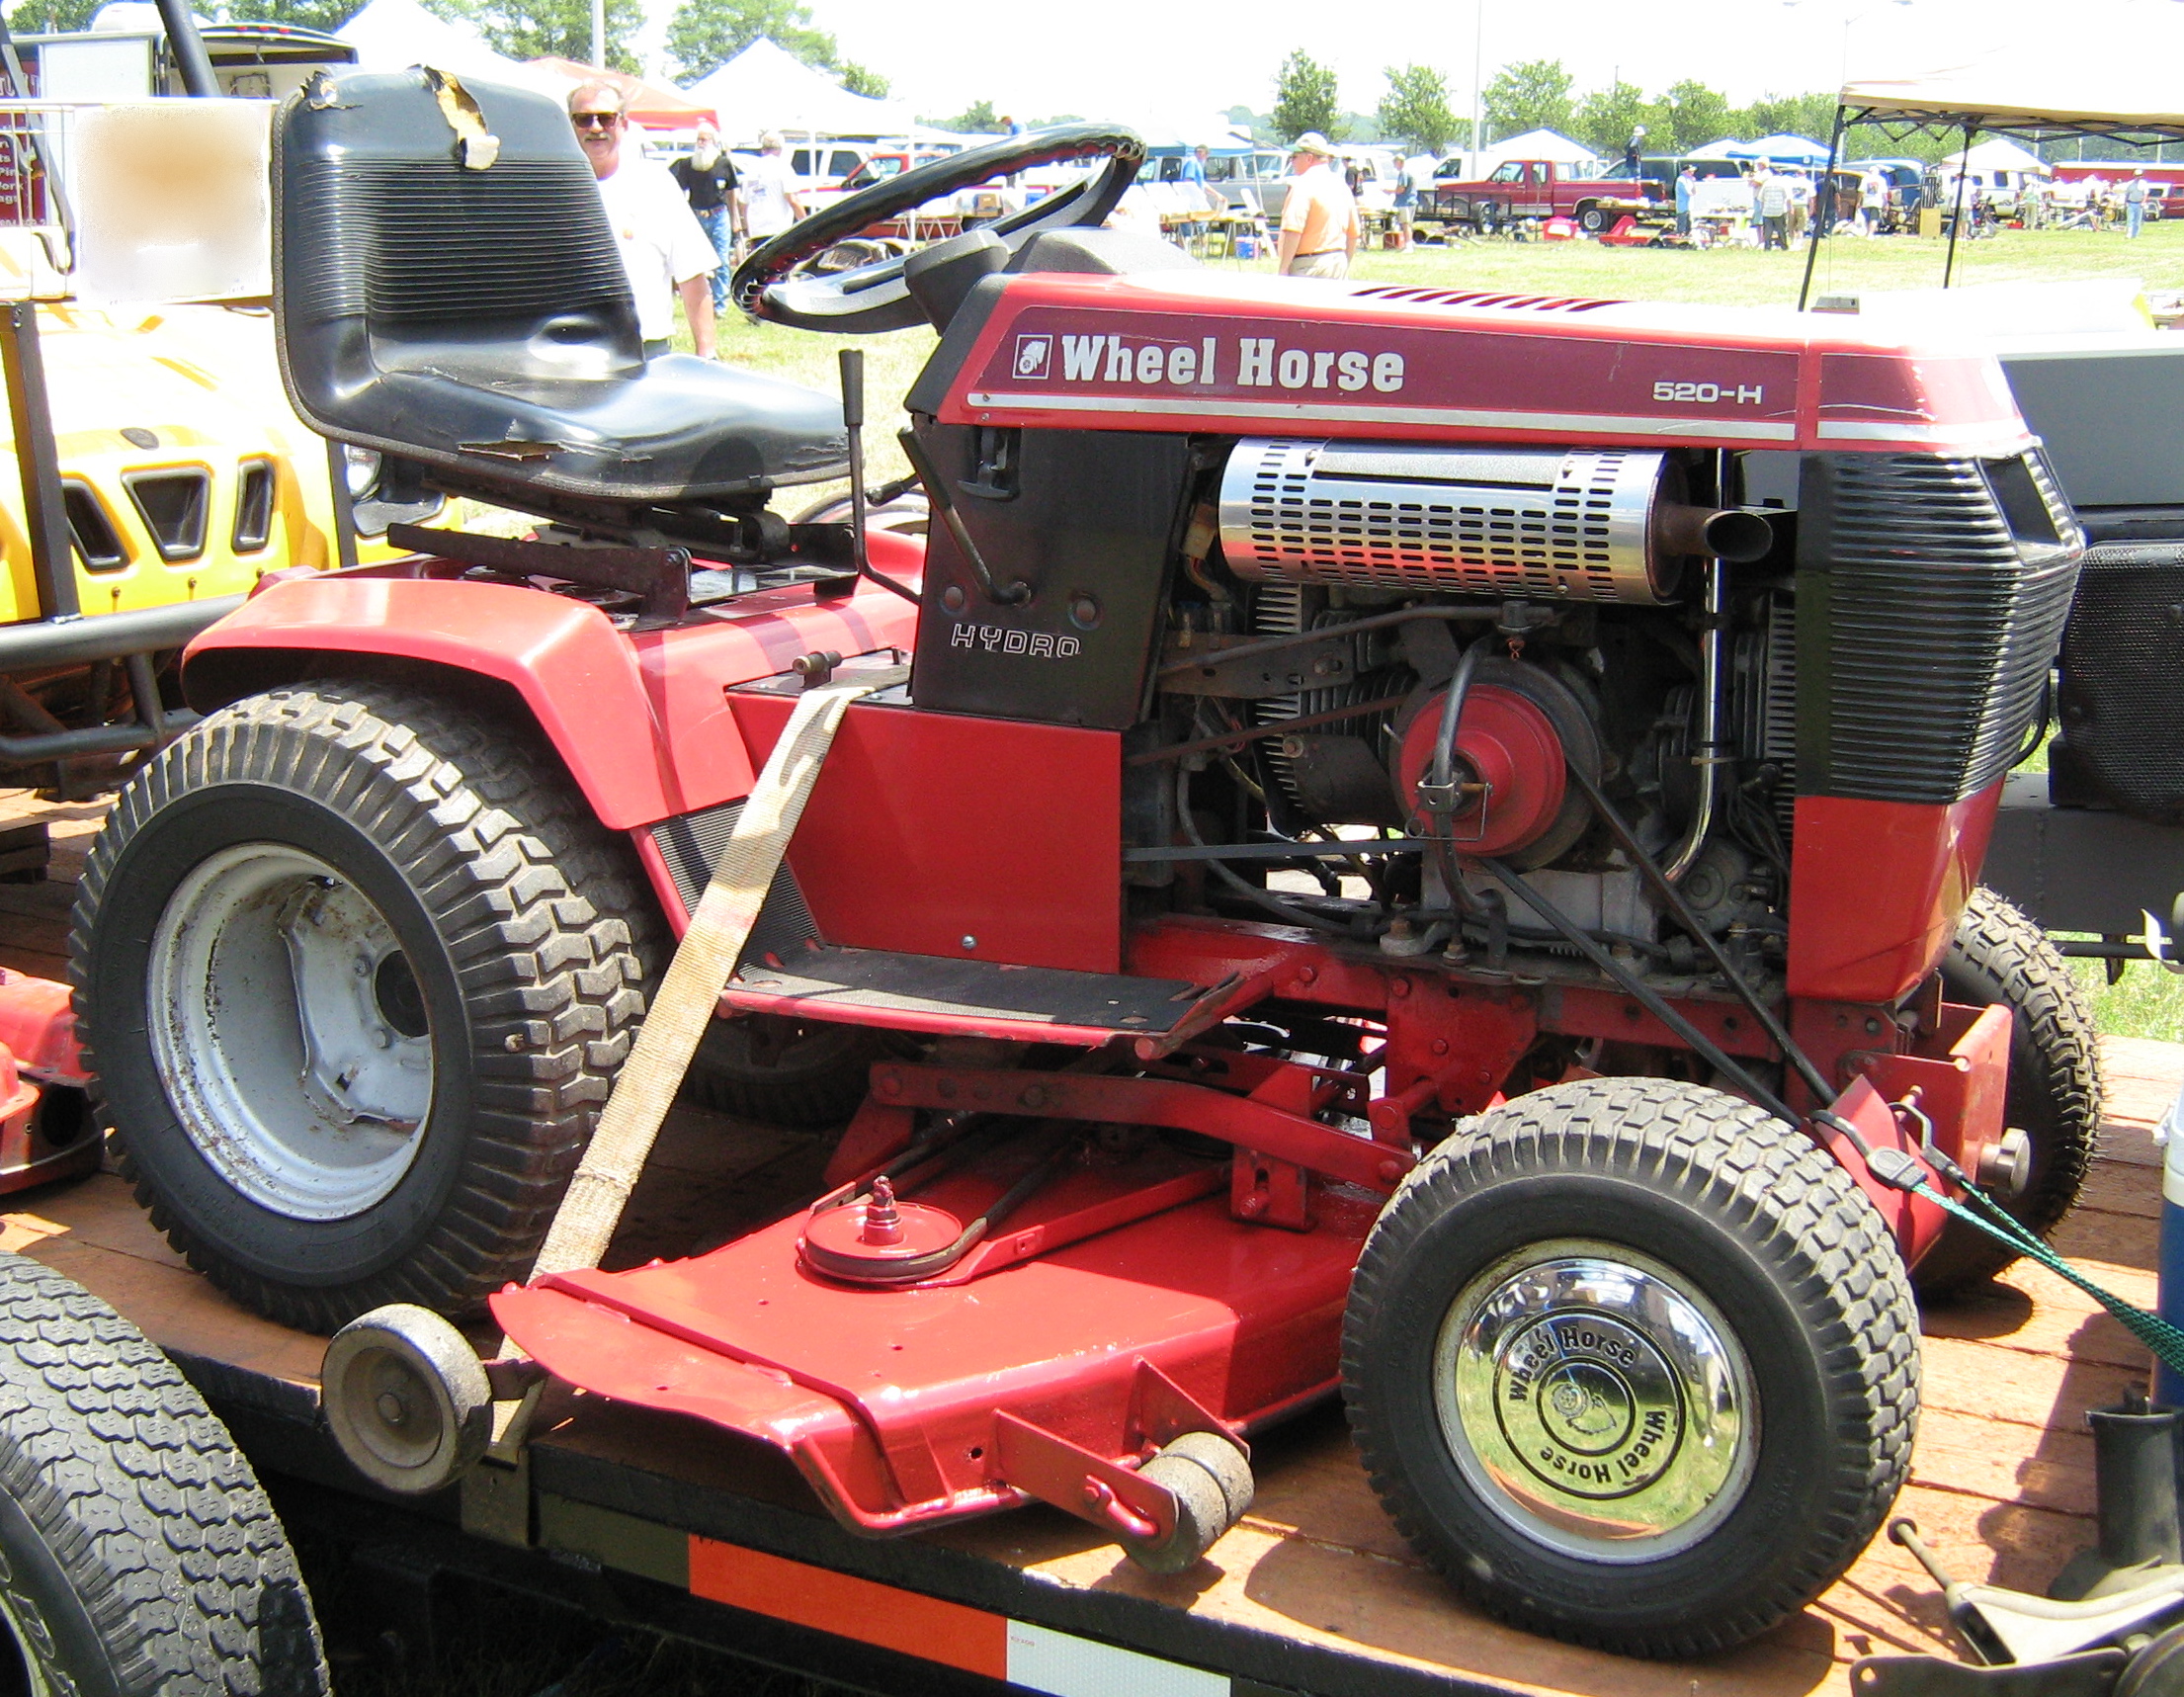 File:1986 Wheel Horse 520-H garden tractor-s.jpg - Wikimedia Commons